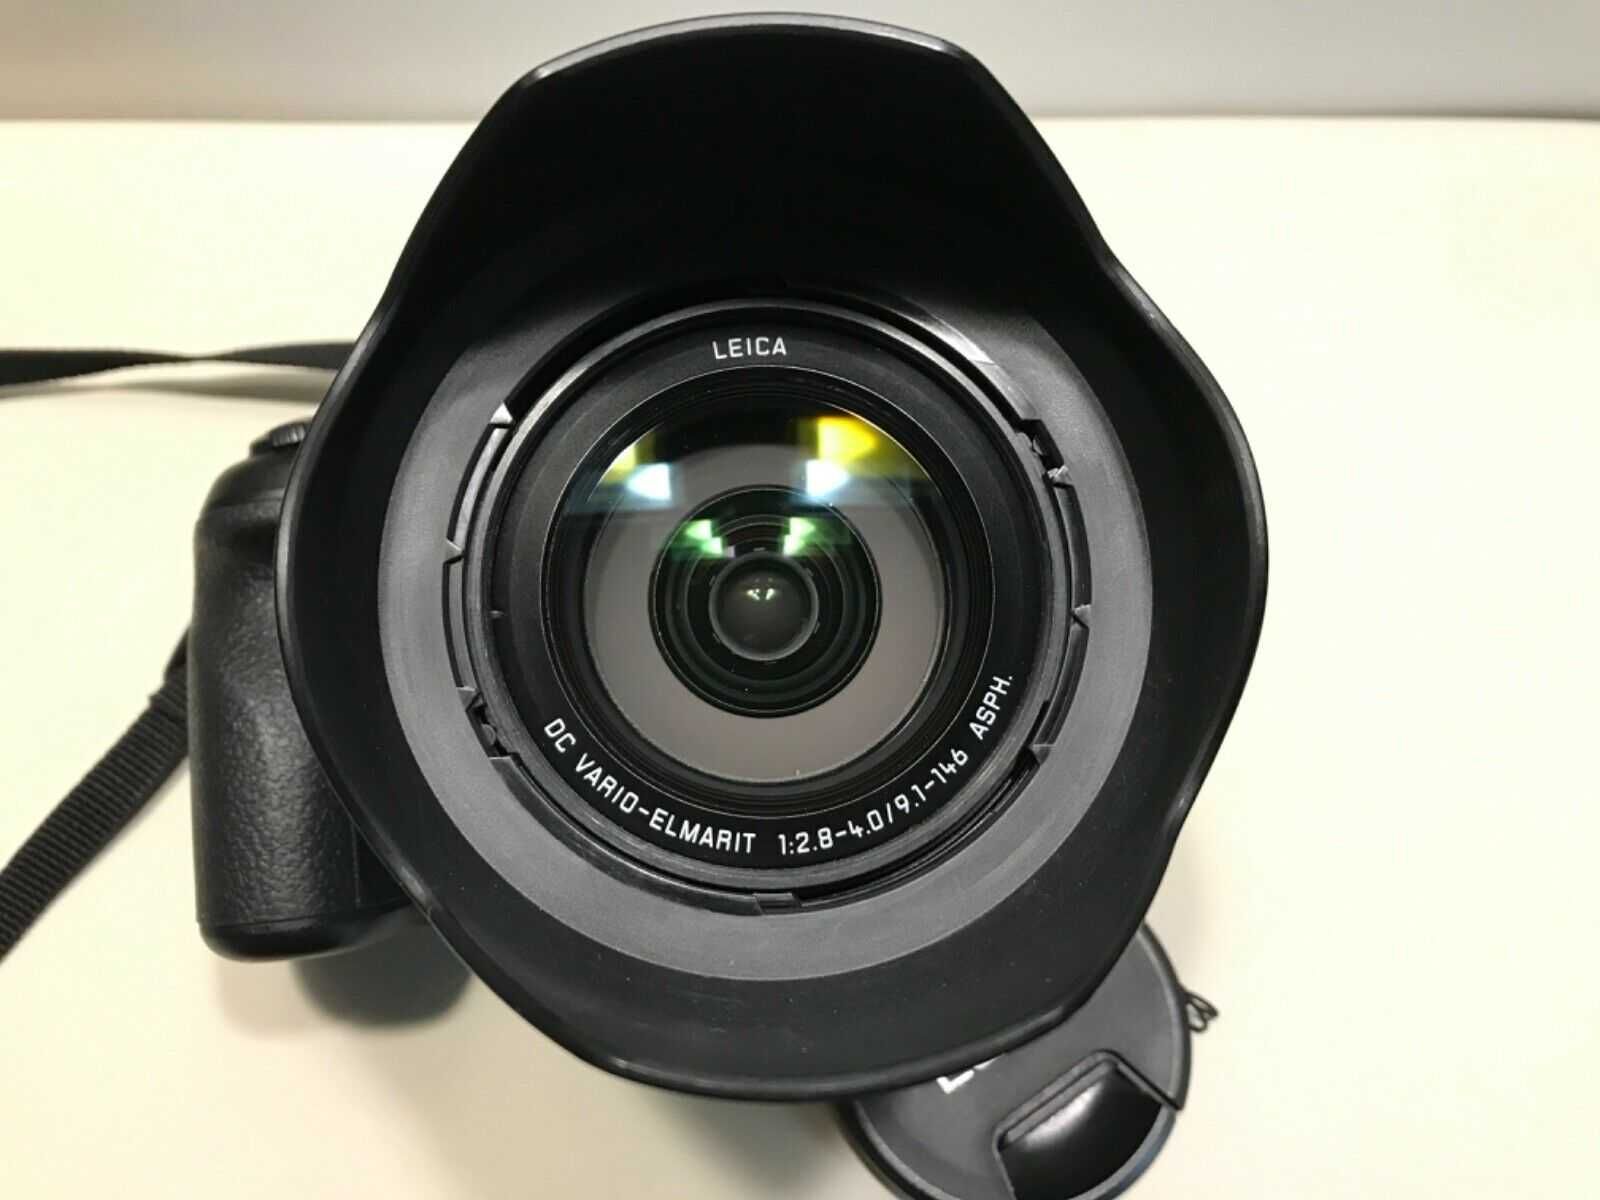 Troco-Panasonic Lumix FZ1000;lentes Leica;4K;WiFi; NFC;sensor Cmos 1"